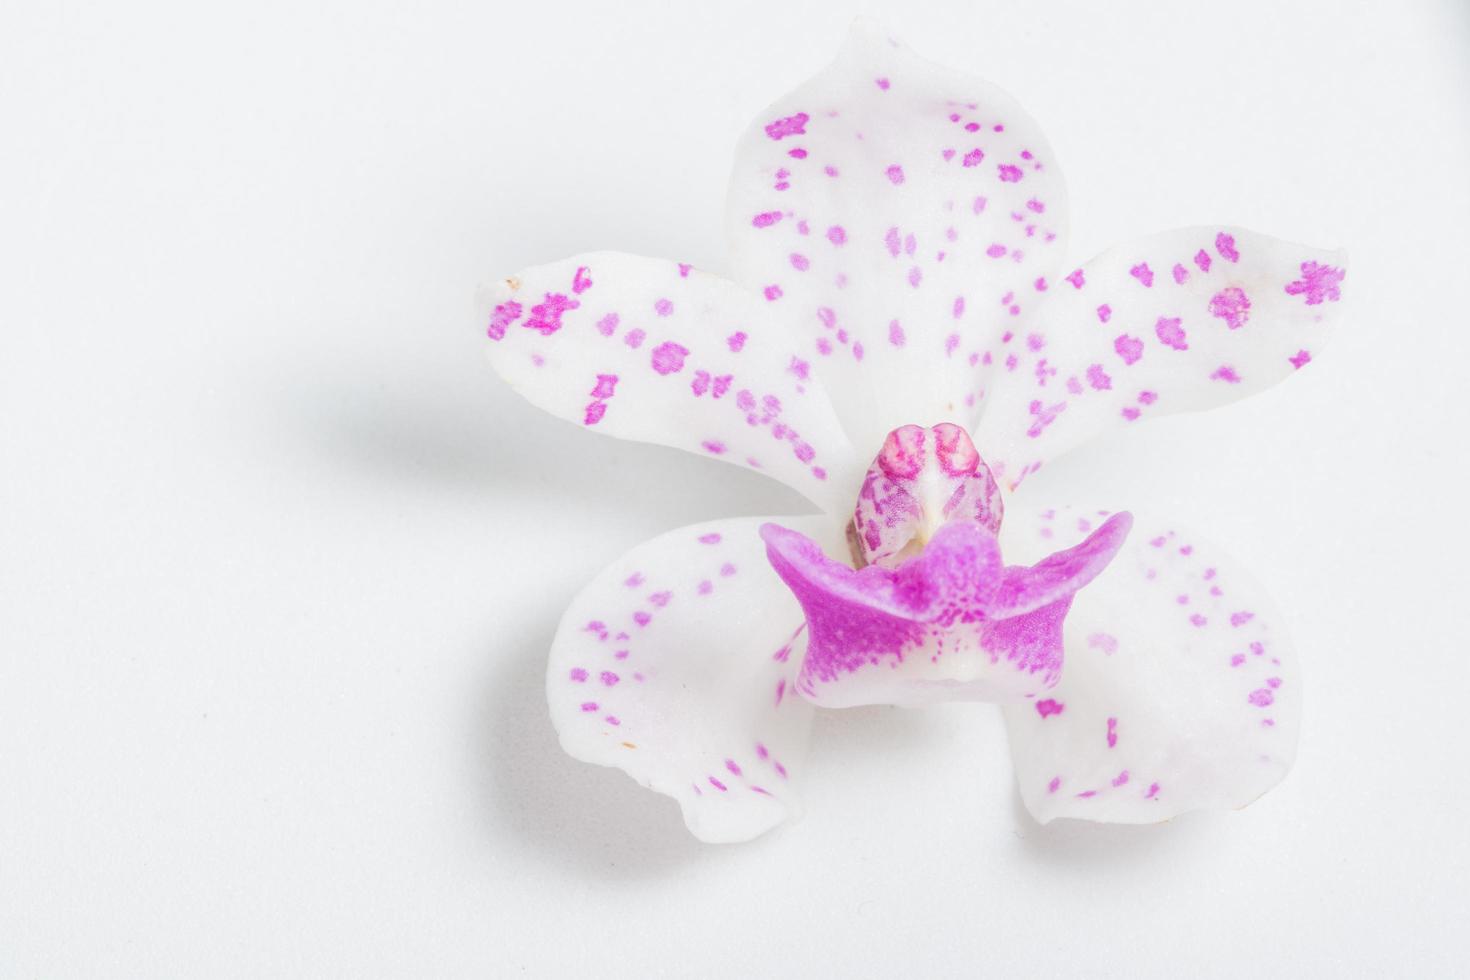 flor de orquídea em fundo branco foto